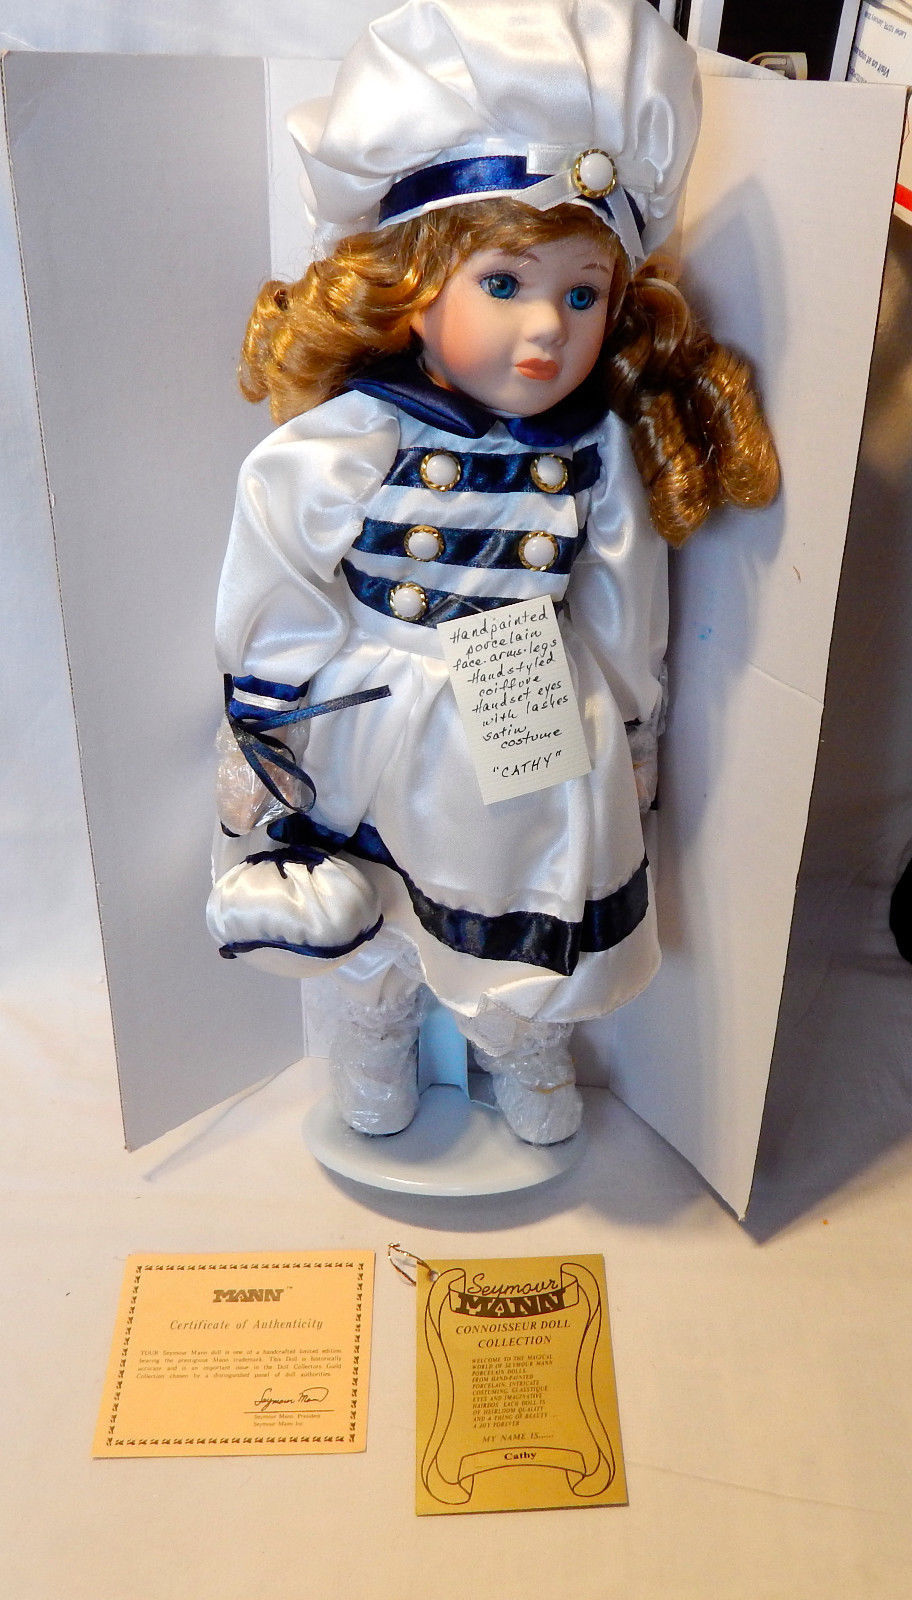 seymour mann doll collection